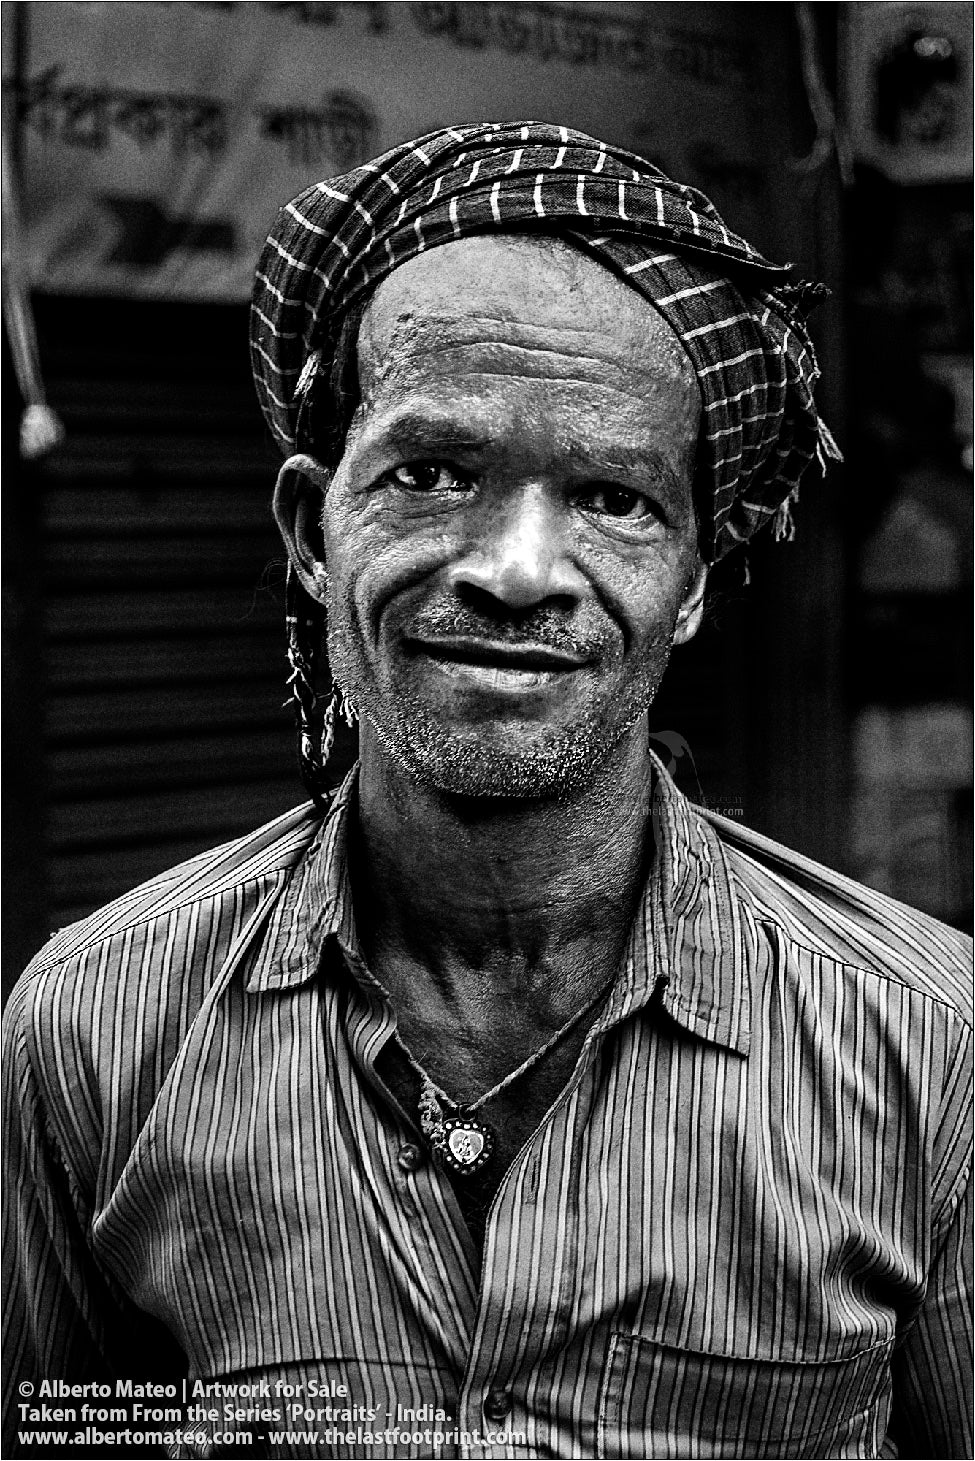 Portrait of Smiling Porter in Bara Bazar, Kolkata, India. [BLACK AND WHITE]